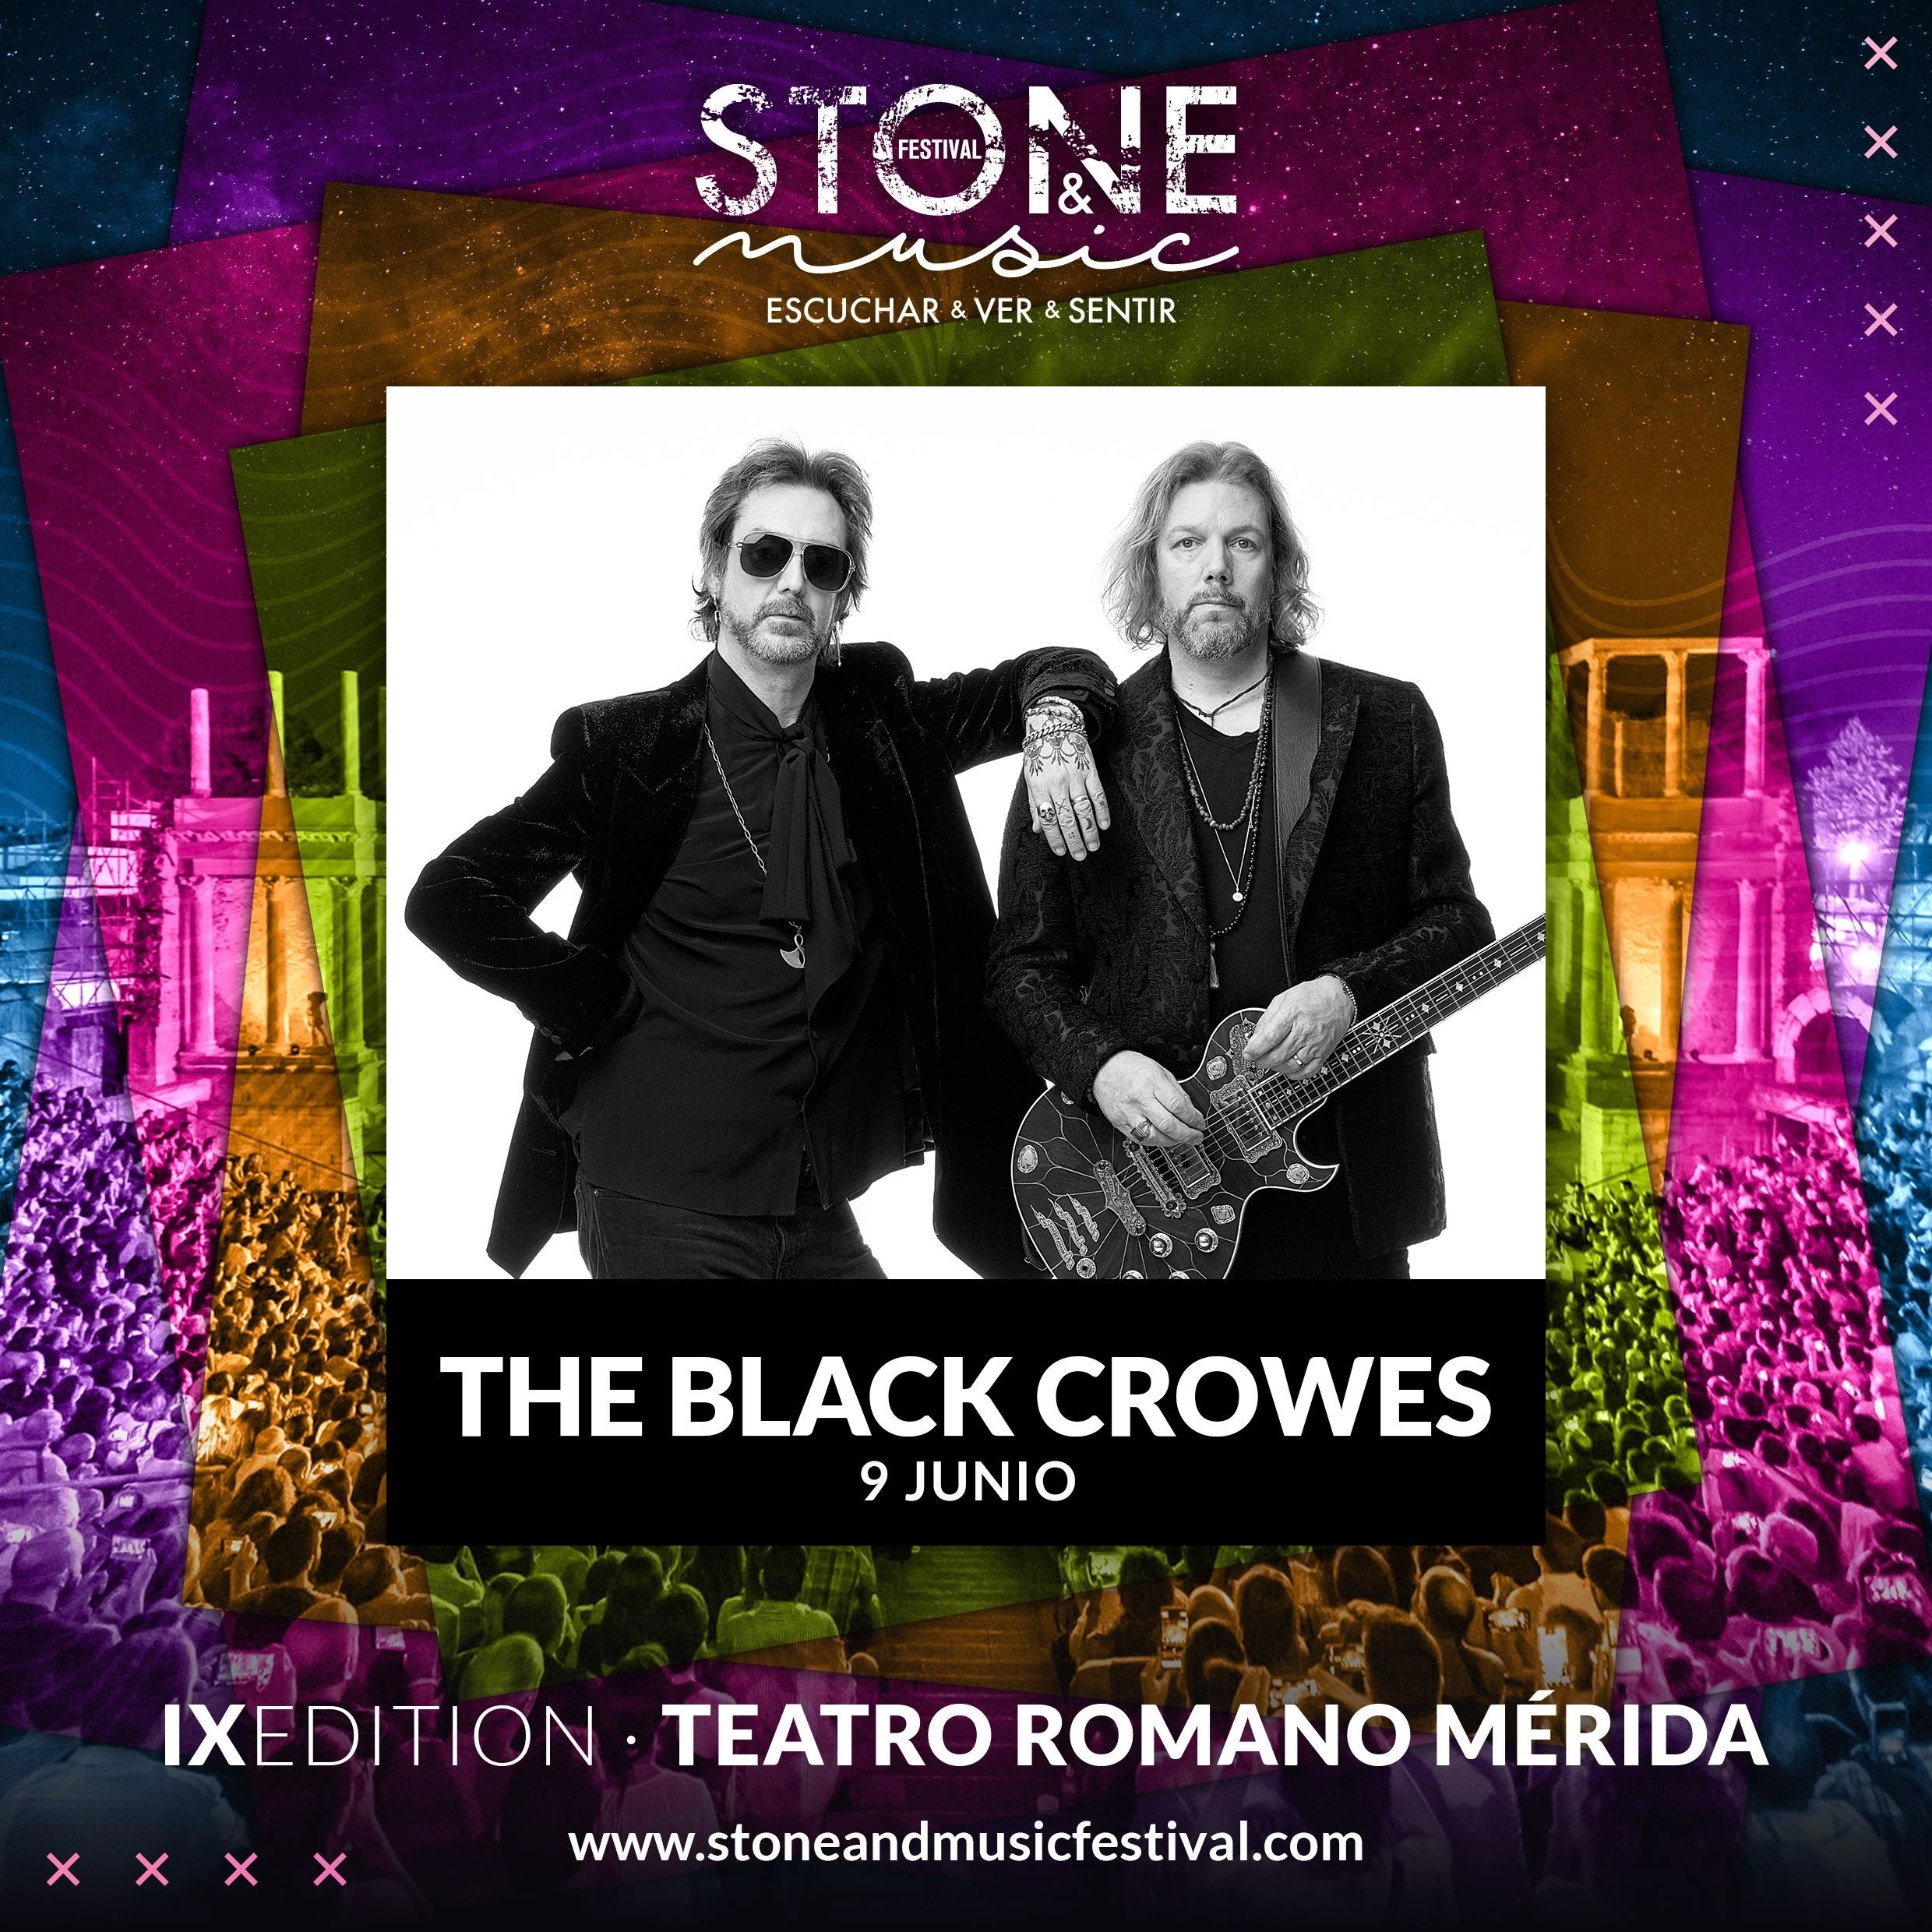 Image 4 of article The Black Crowes y Víctor Manuel se suman al cartel del STONE&MUSIC Festival